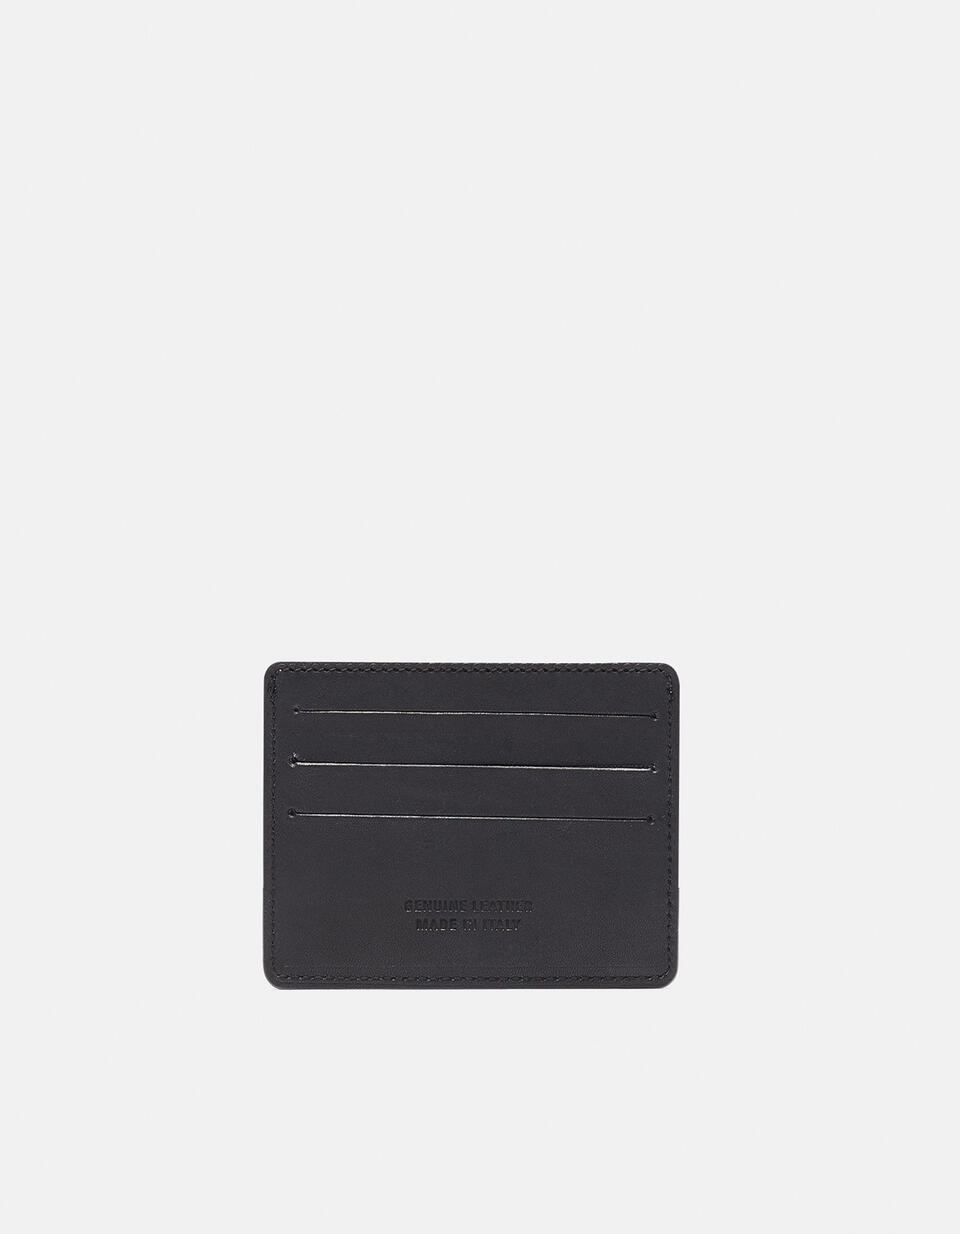 Bourbon credit card holder with banknote holder opening - Card Holders - Men's Wallets | Wallets NERO - Card Holders - Men's Wallets | WalletsCuoieria Fiorentina